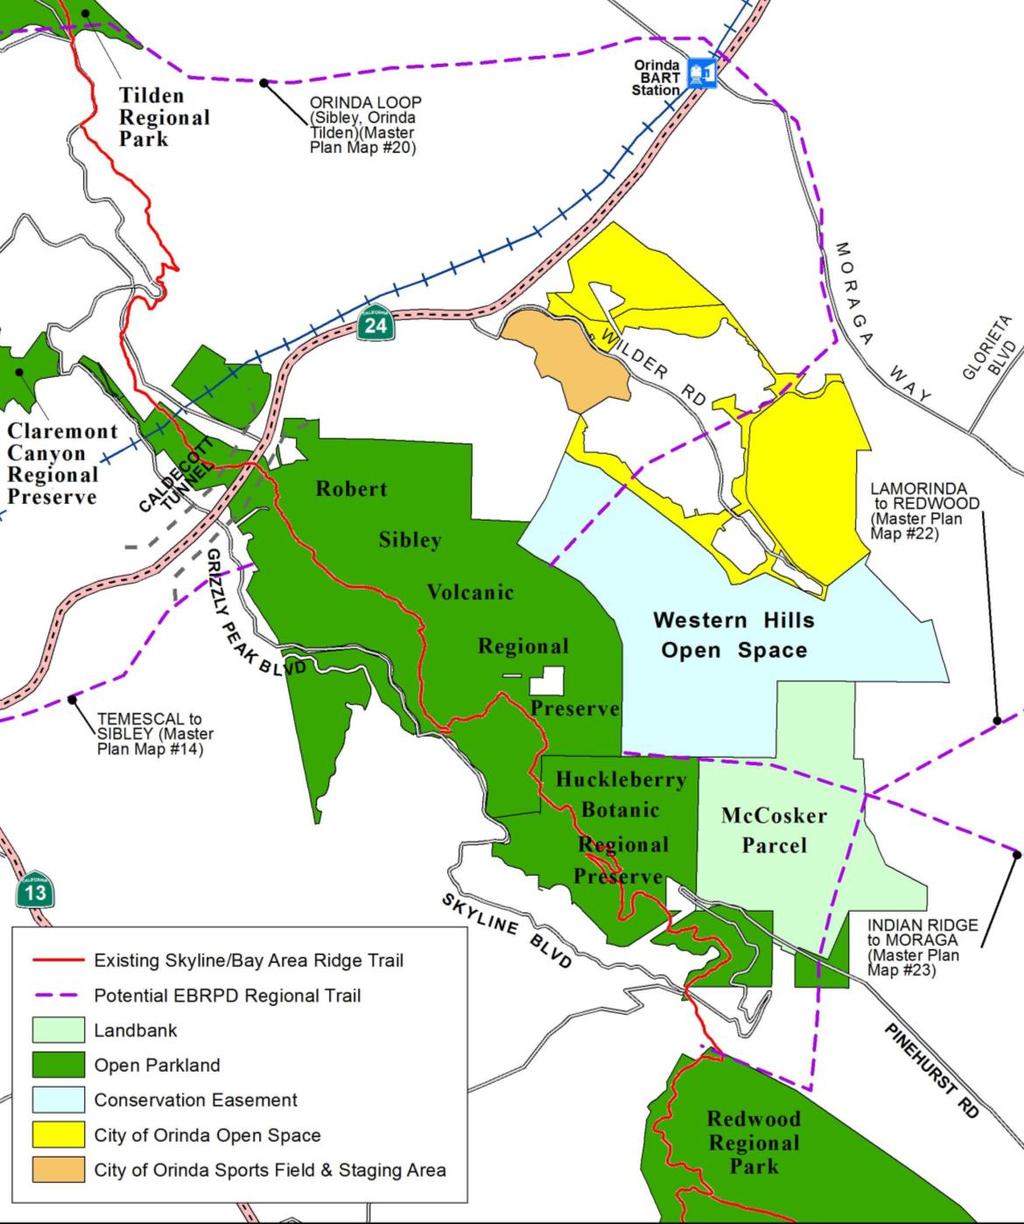 LUPA Study Area Wilder Development 660-acre - Robert Sibley Volcanic Regional Preserve Sibley Regional Preserve